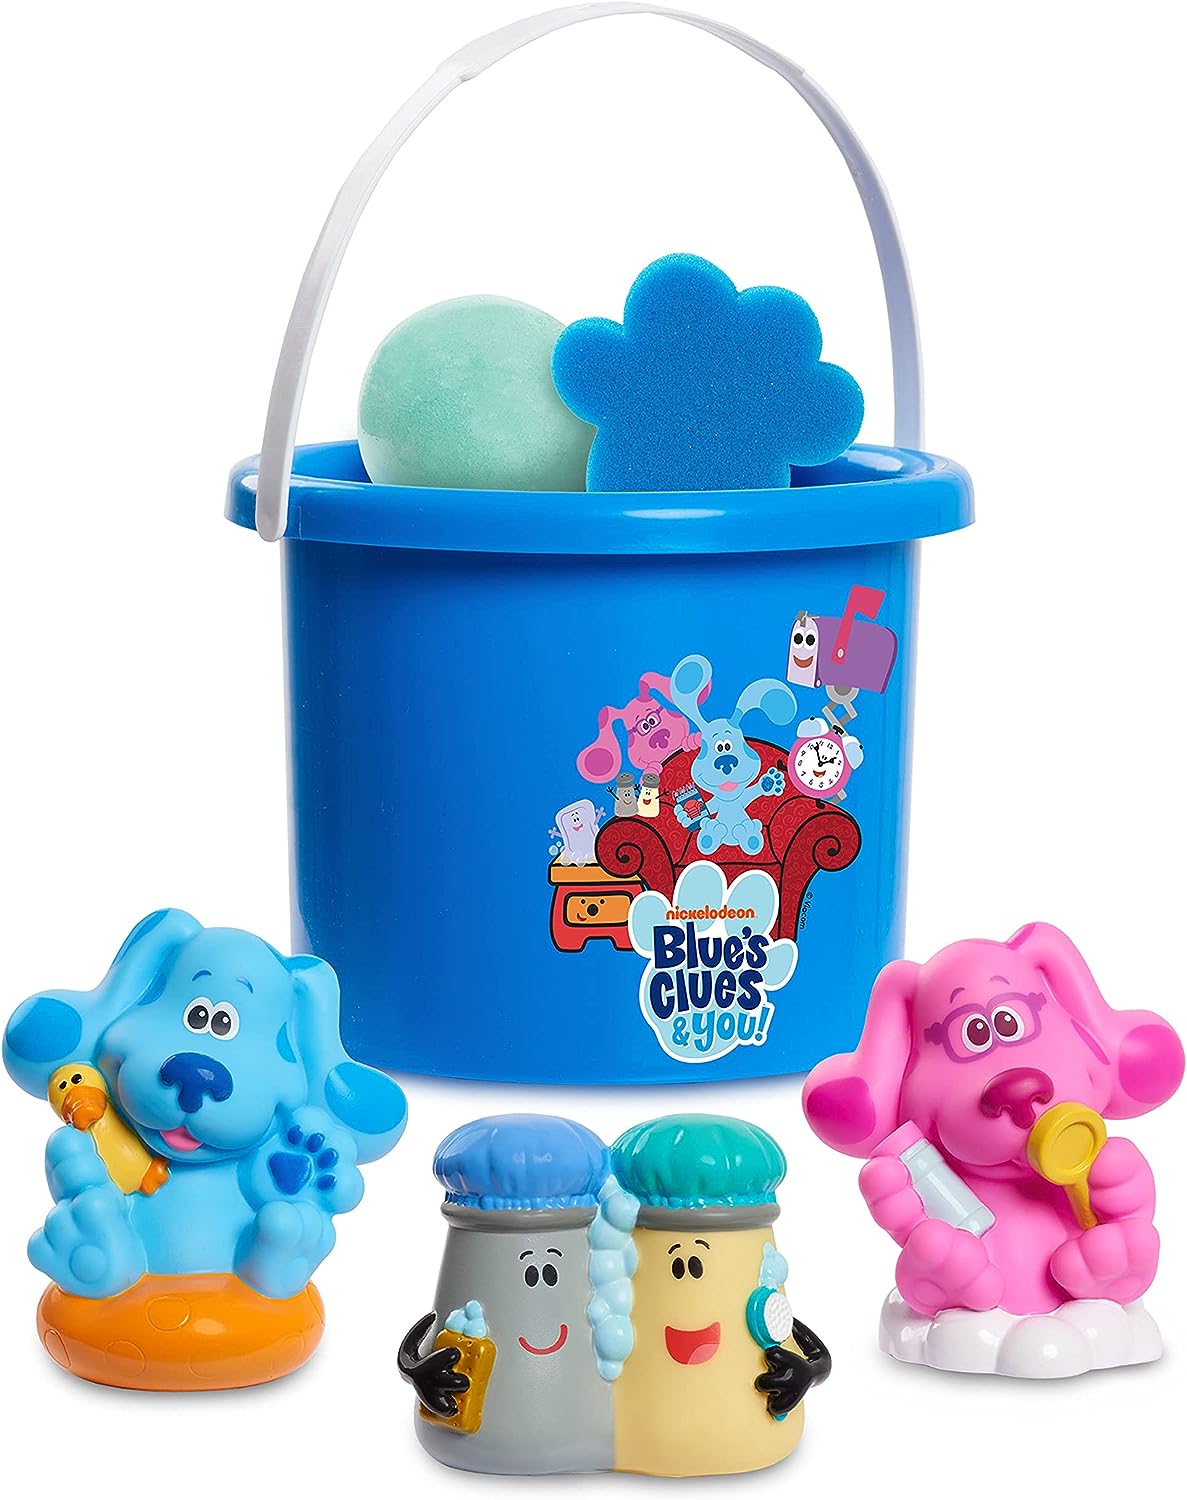 7-Piece Blue's Clues & You! Bath Bucket Set (3 Water Toys, 1 Figure, Bath Bomb, Sponge & Bucket) $5.71 + Free Shipping w/ Prime or on $35+